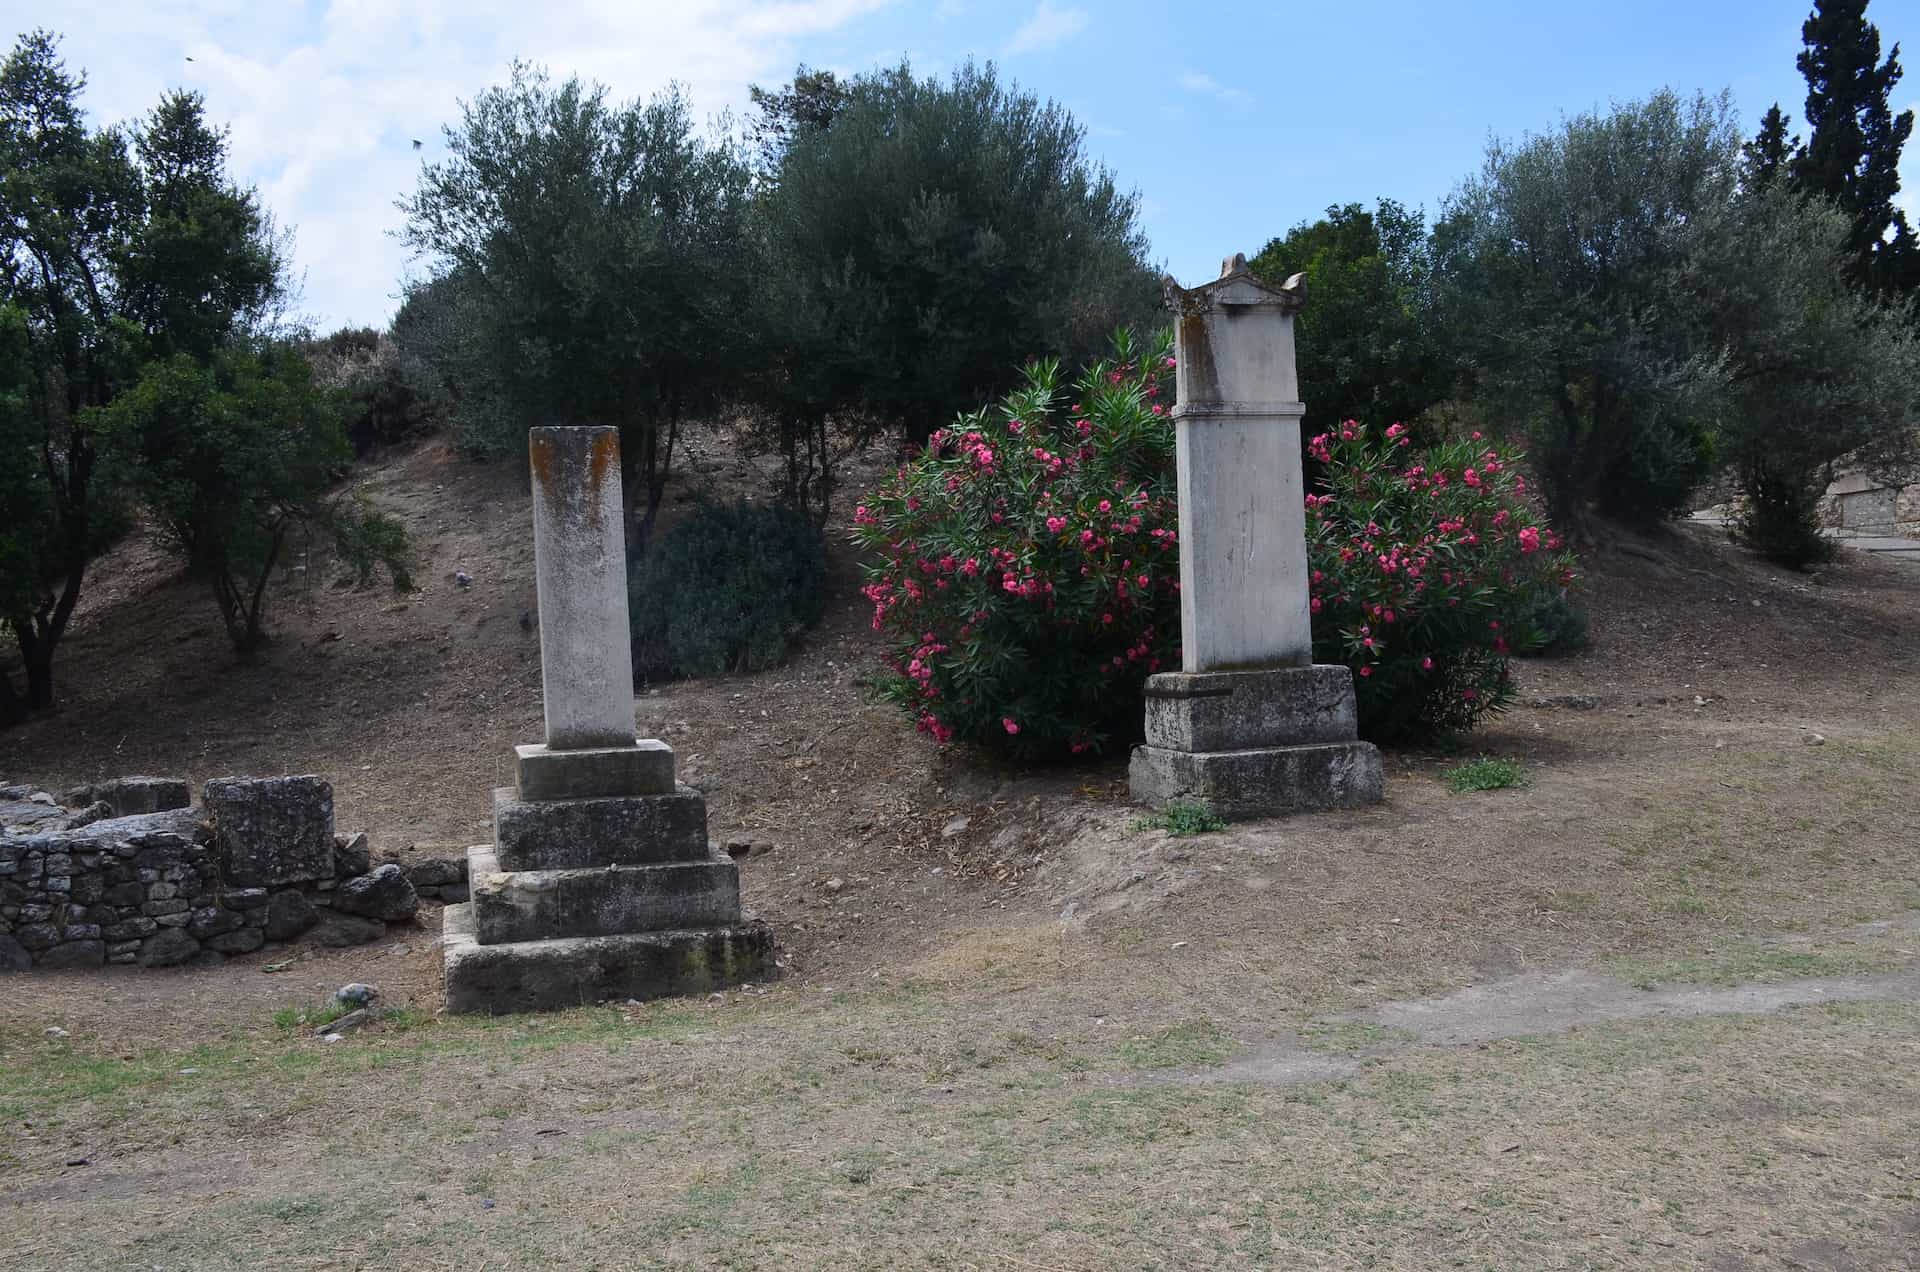 Ambassadors' grave monuments